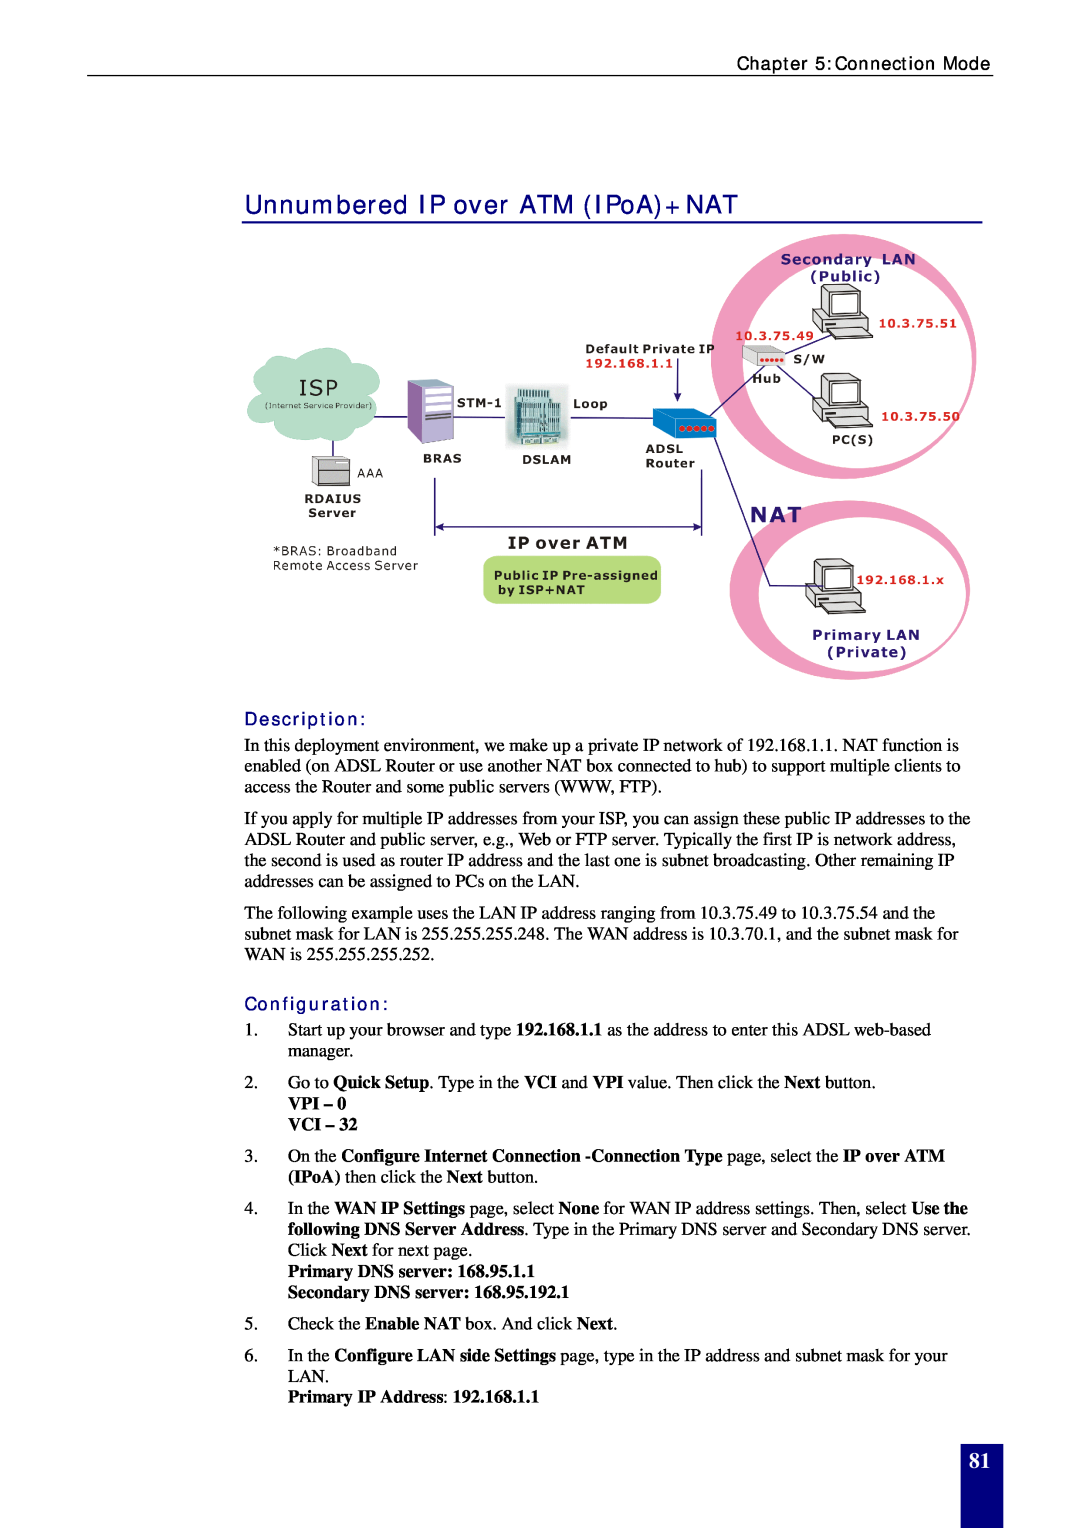 Dynalink RTA770W user manual Unnumbered IP over ATM IPoA+NAT, Description, Configuration, VPI - 0 VCI, Primary IP Address 